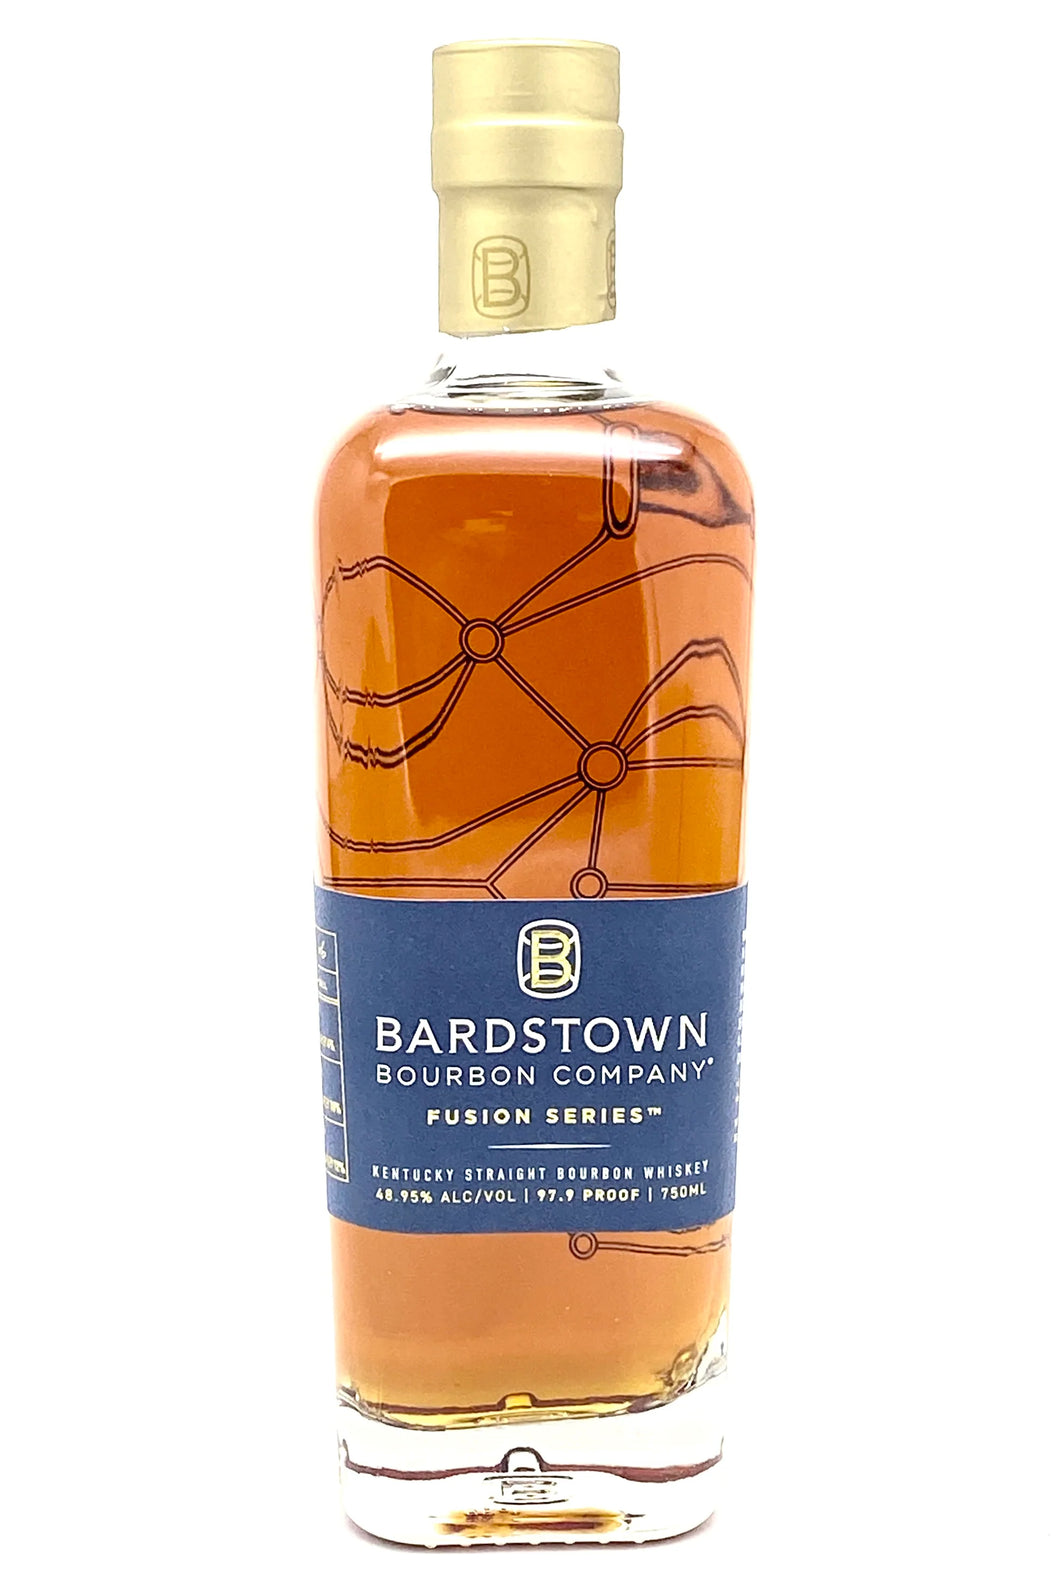 Bardstown Bourbon Co. Fusion Series #6